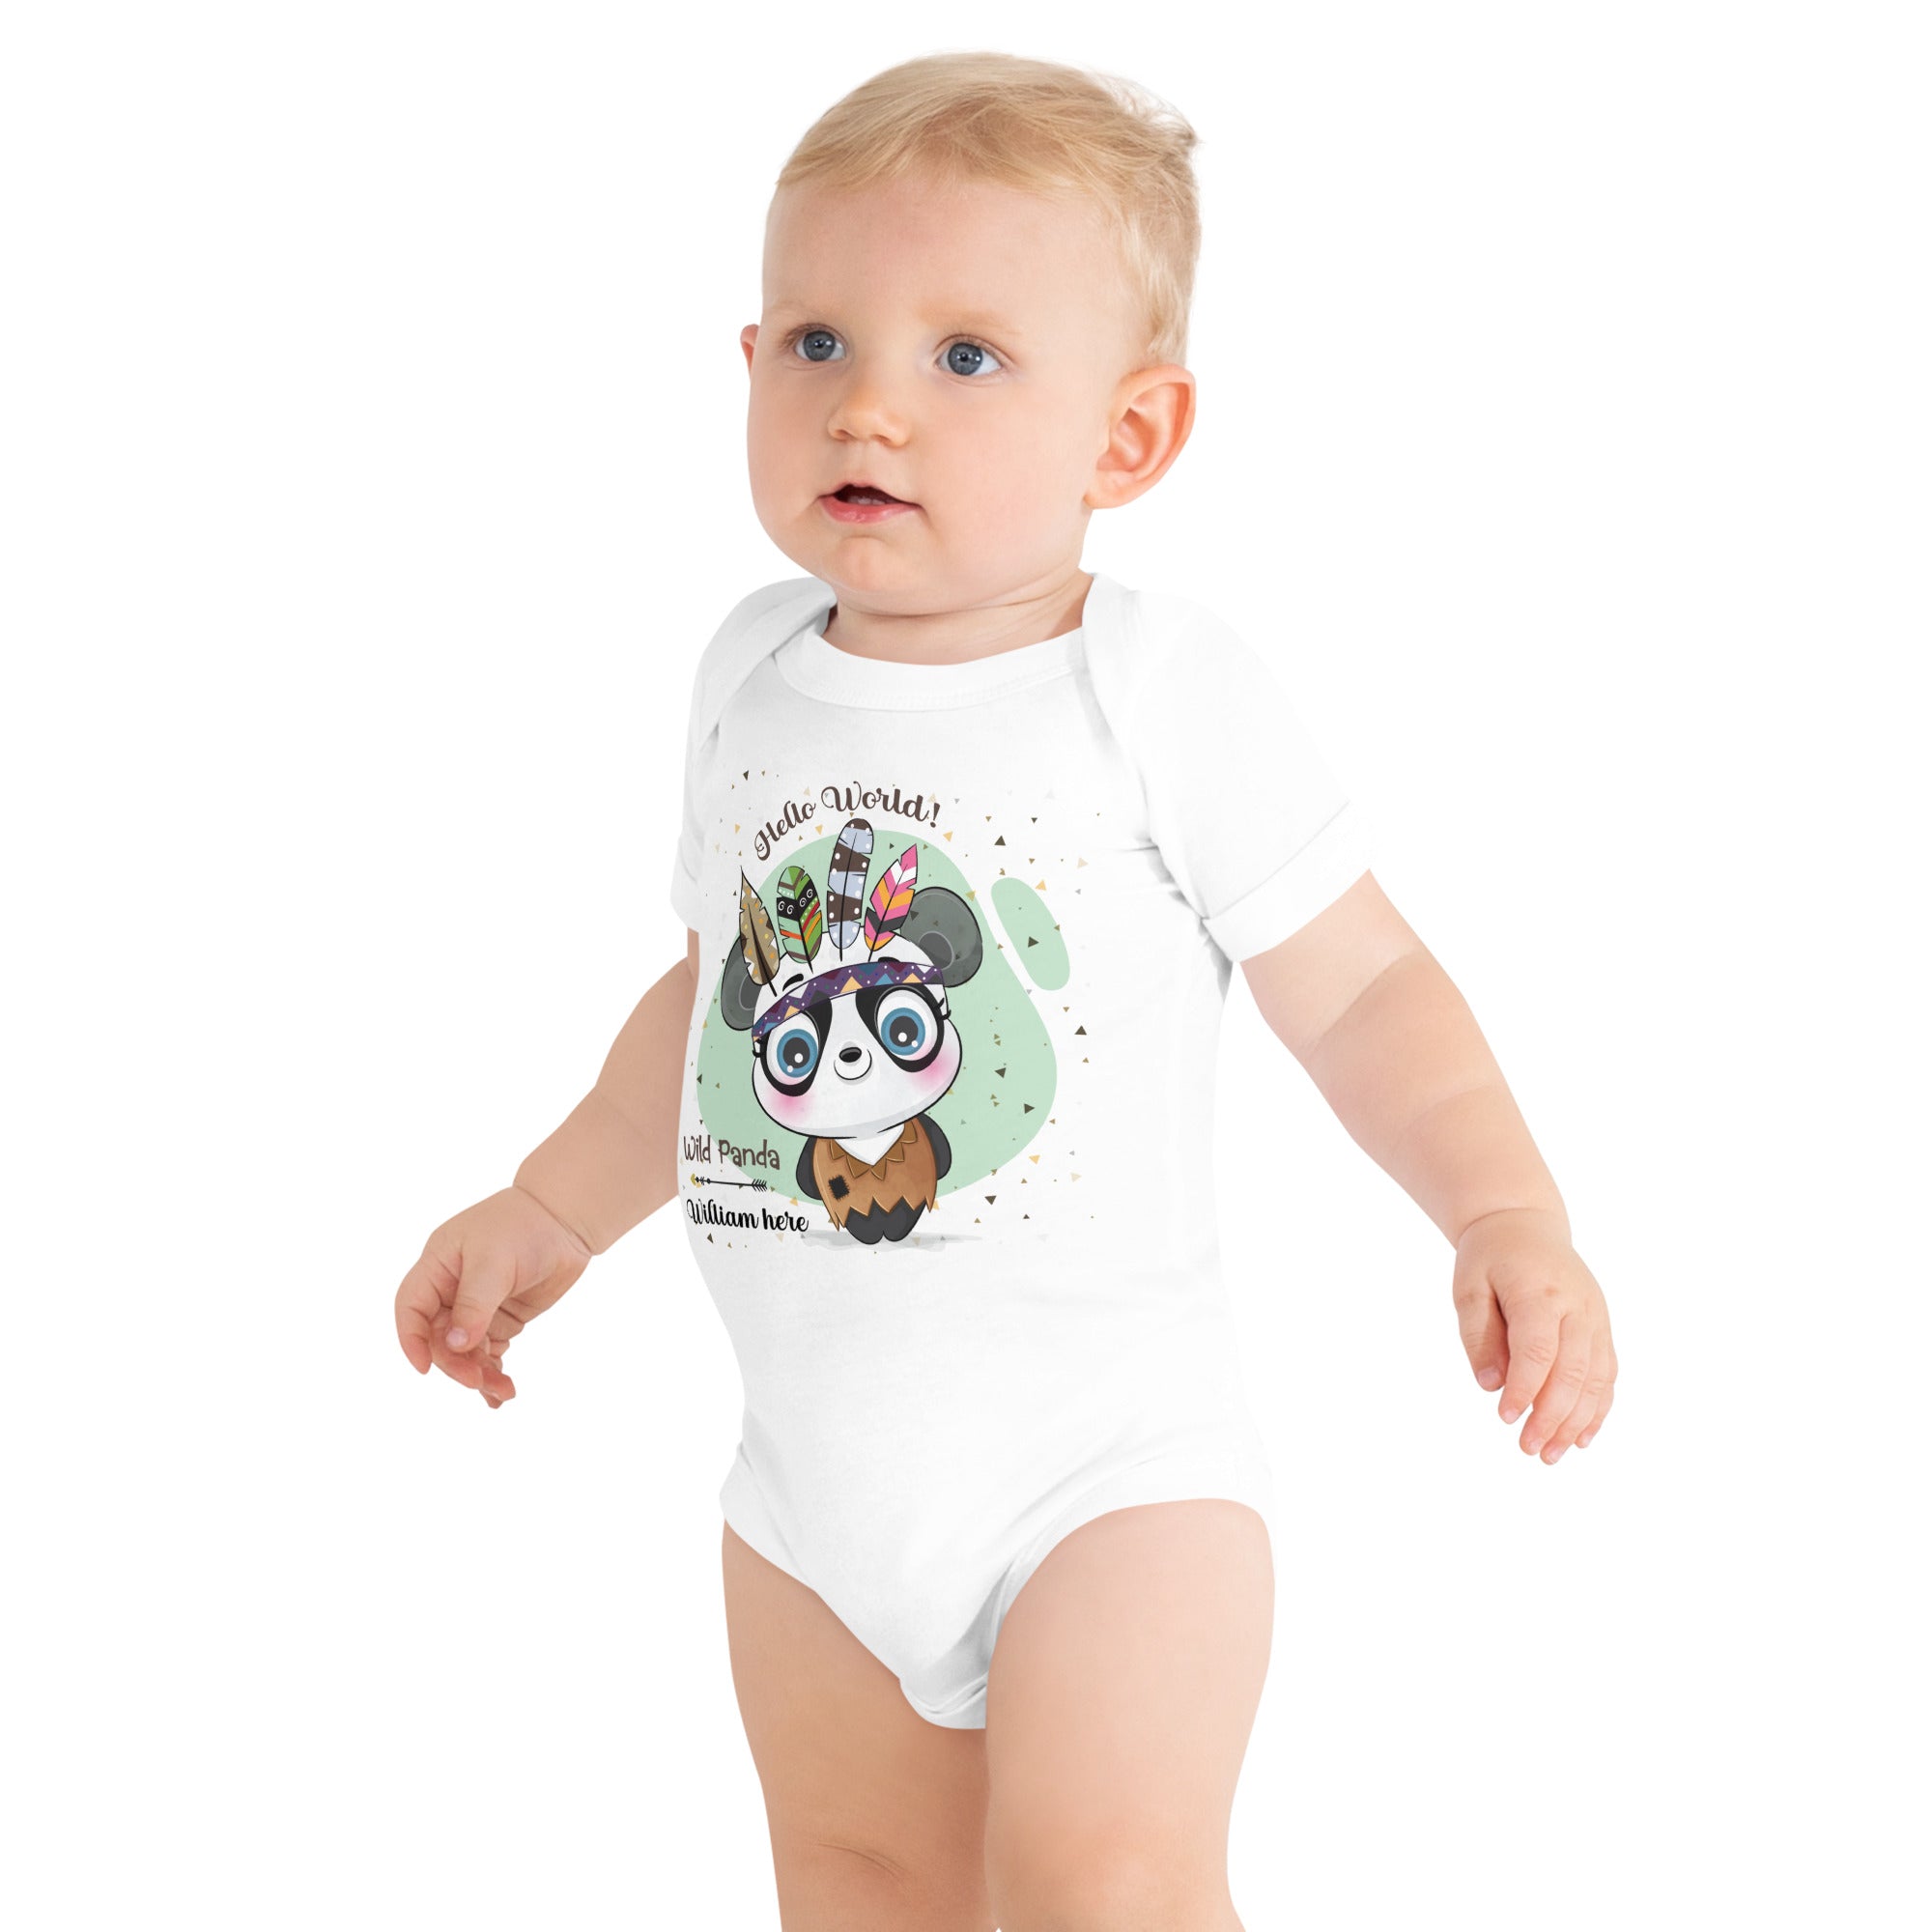  Pregnancy Announcement, Organic cotton baby bodysuit, 